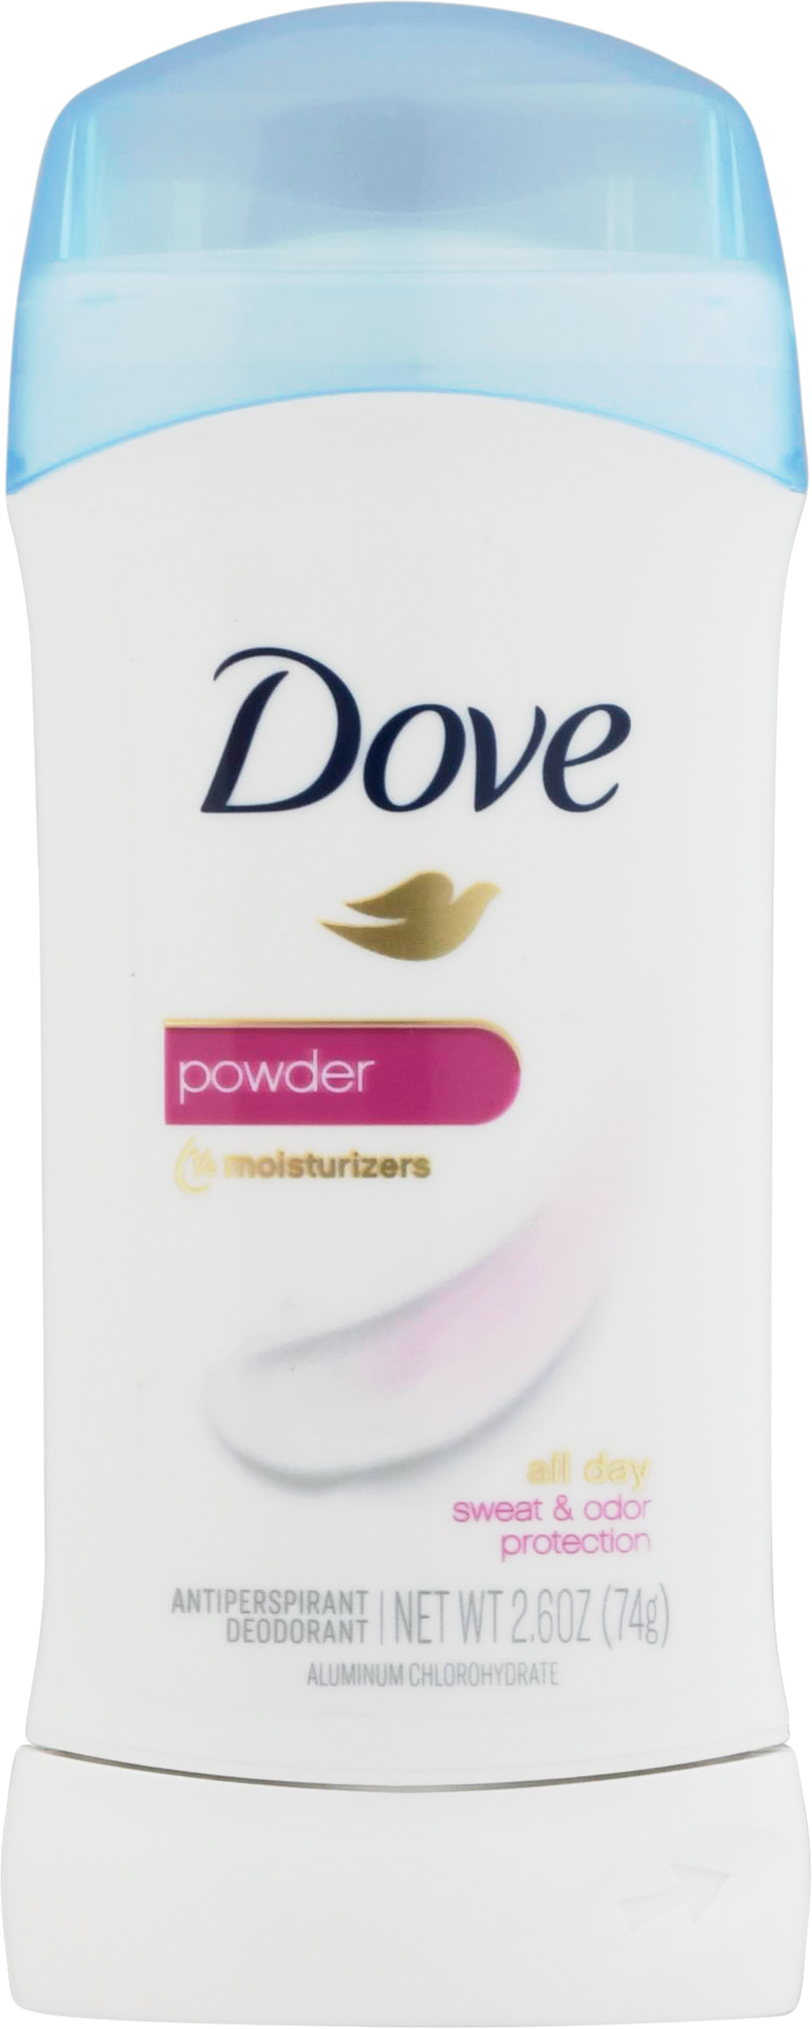 Dove Antiperspirant Deodorant f/Women Powder 2.6oz